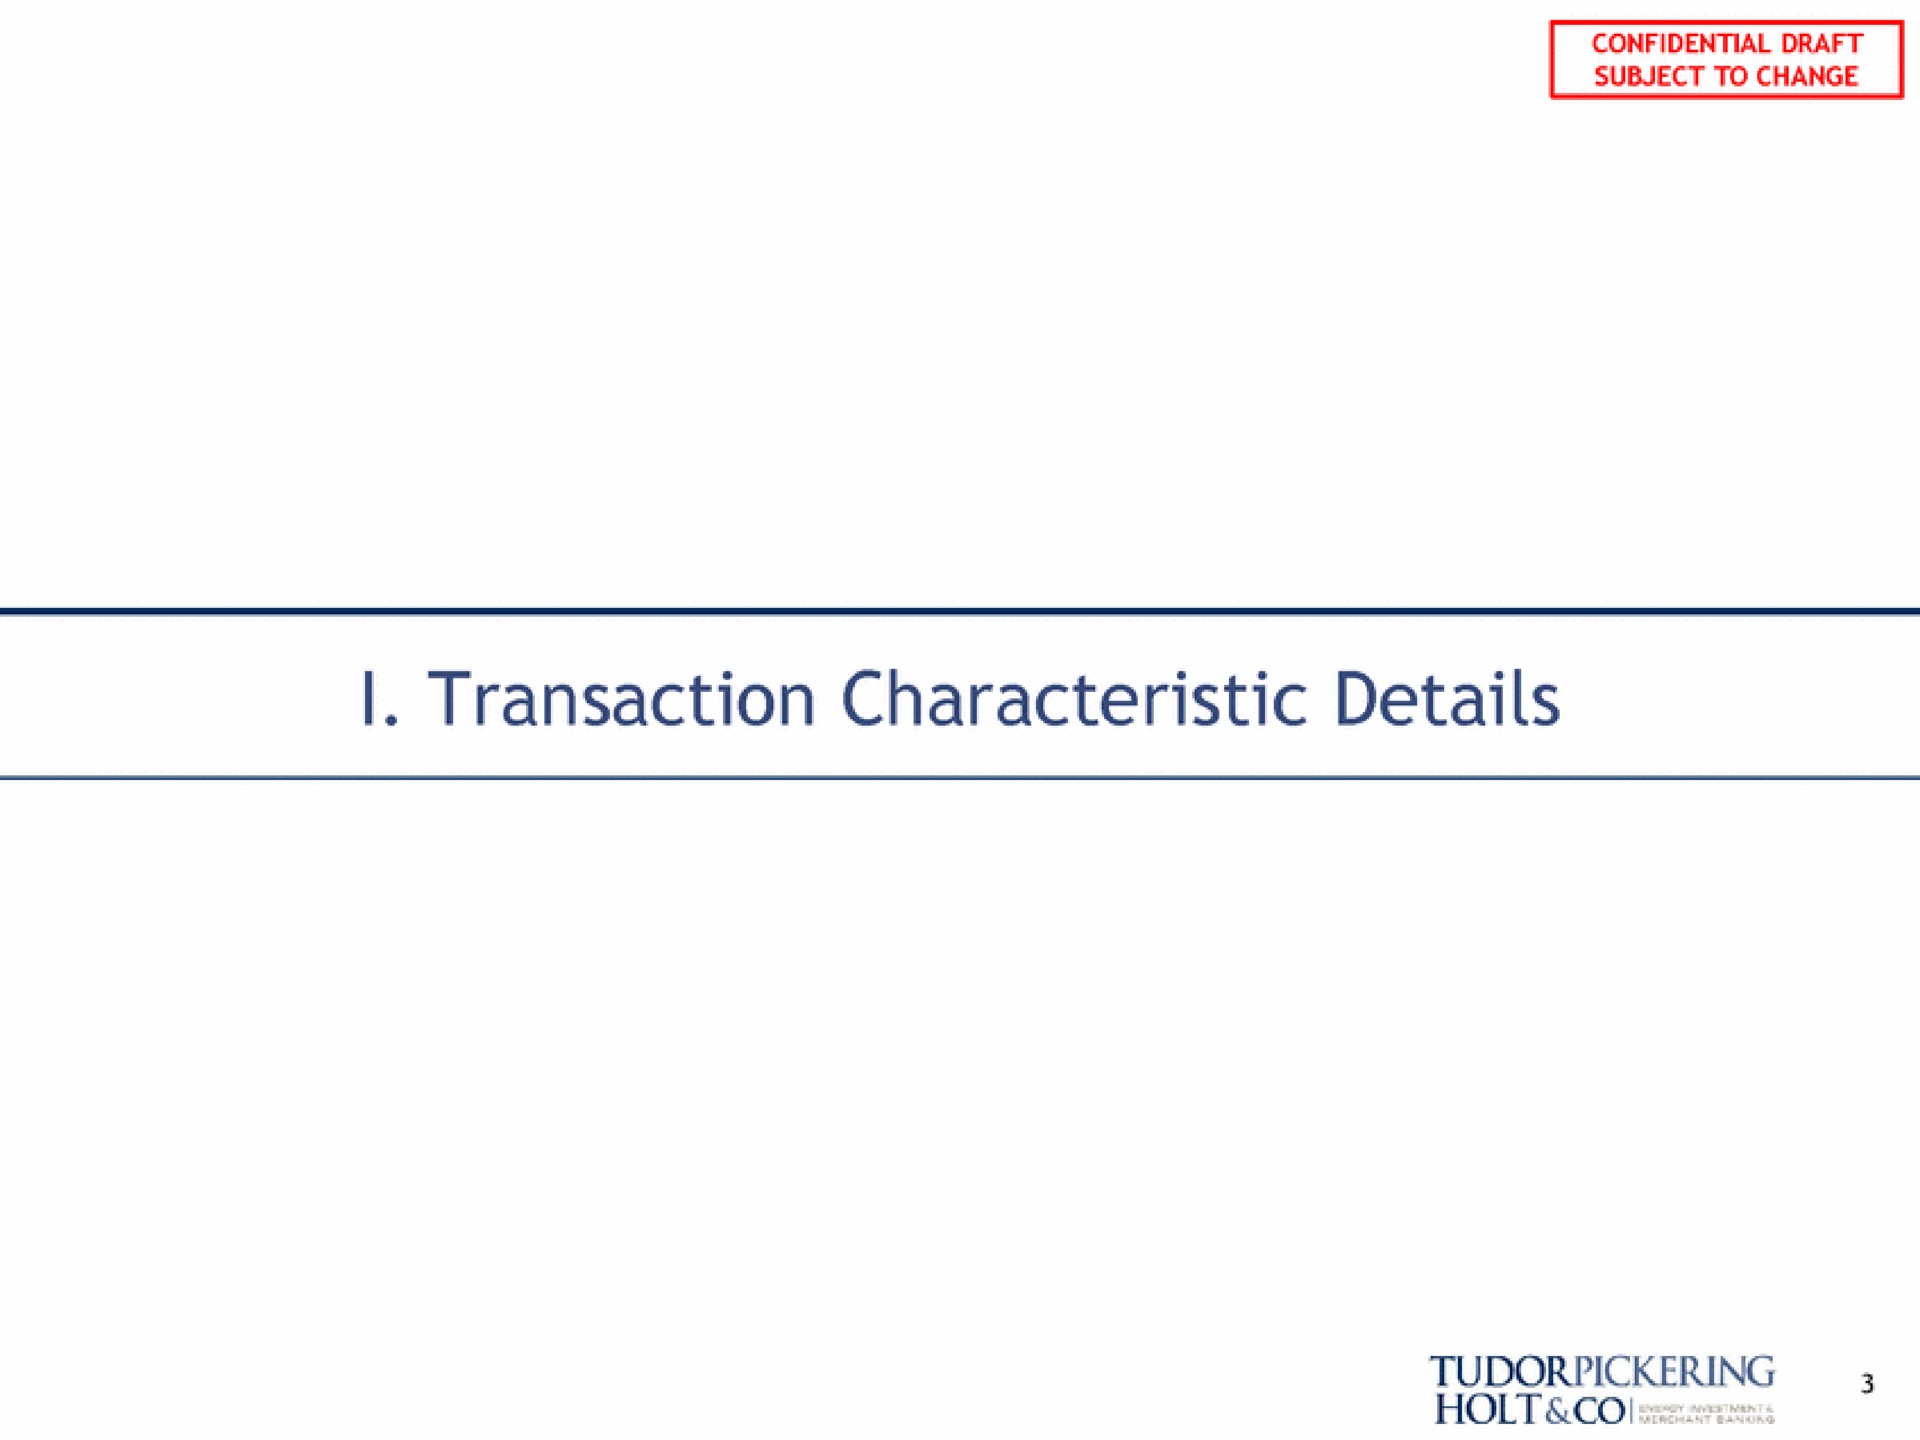 transaction characteristic details | Tudor, Pickering, Holt & Co